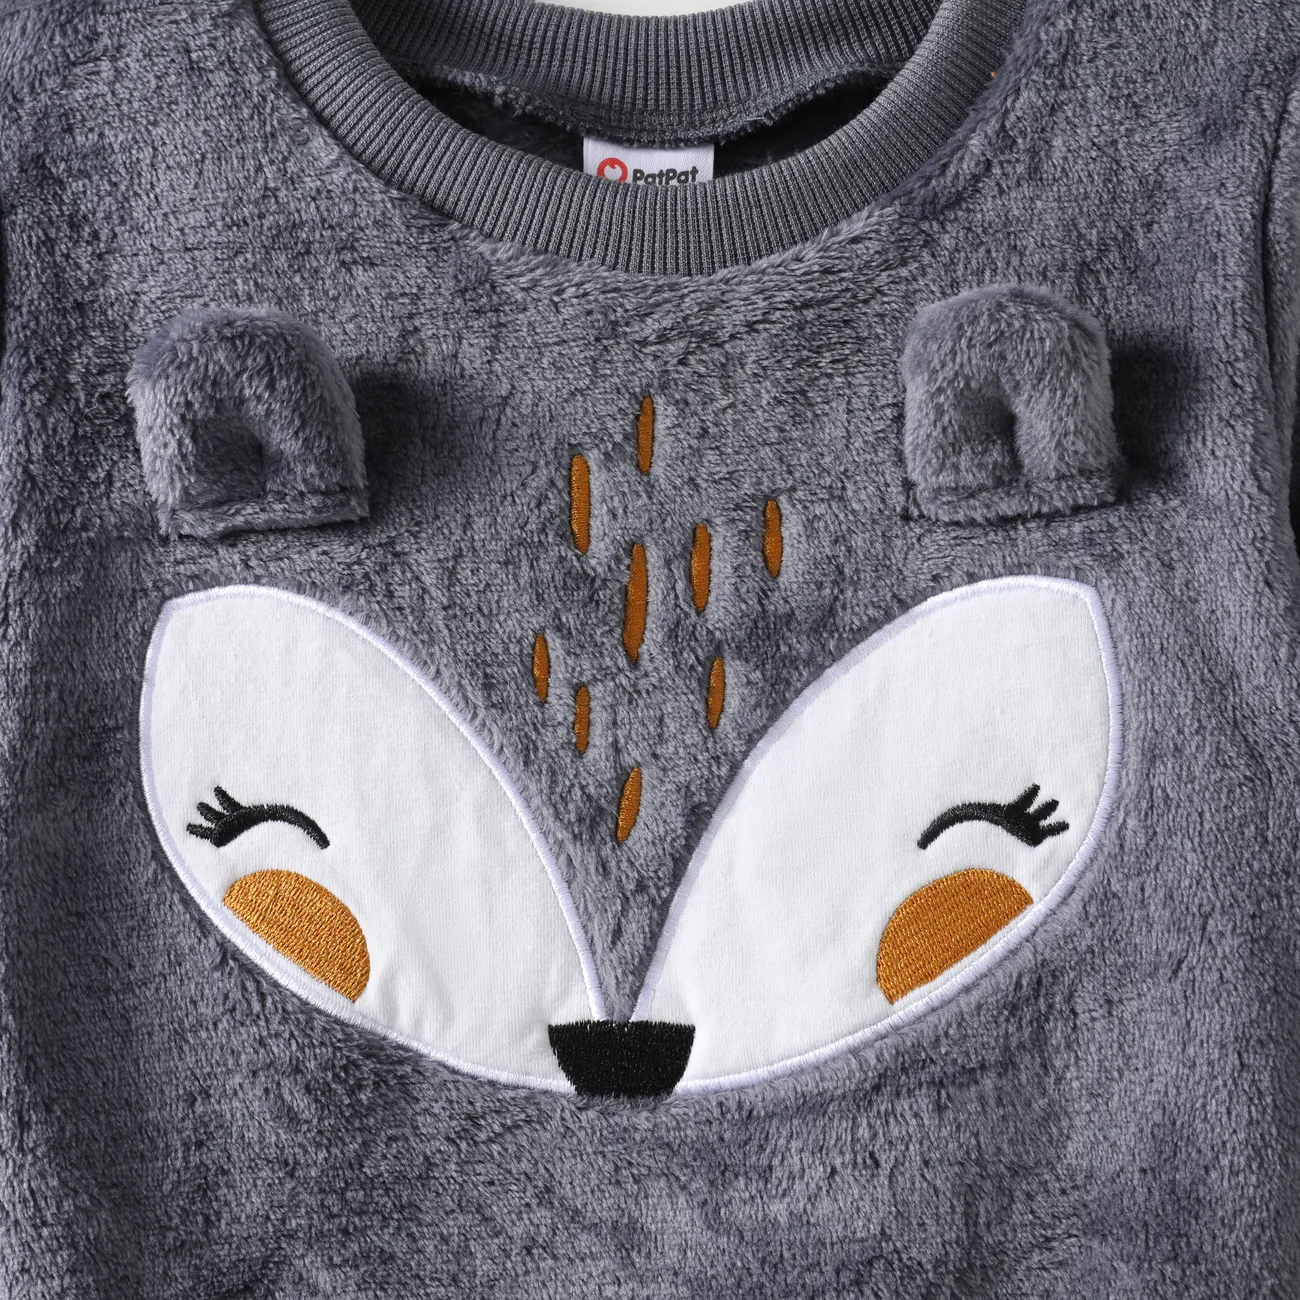 2-piece Toddler Girl/Boy Fox Pattern Ear Design Fuzzy Sweatshirt and Pants Set Dark Grey big image 1